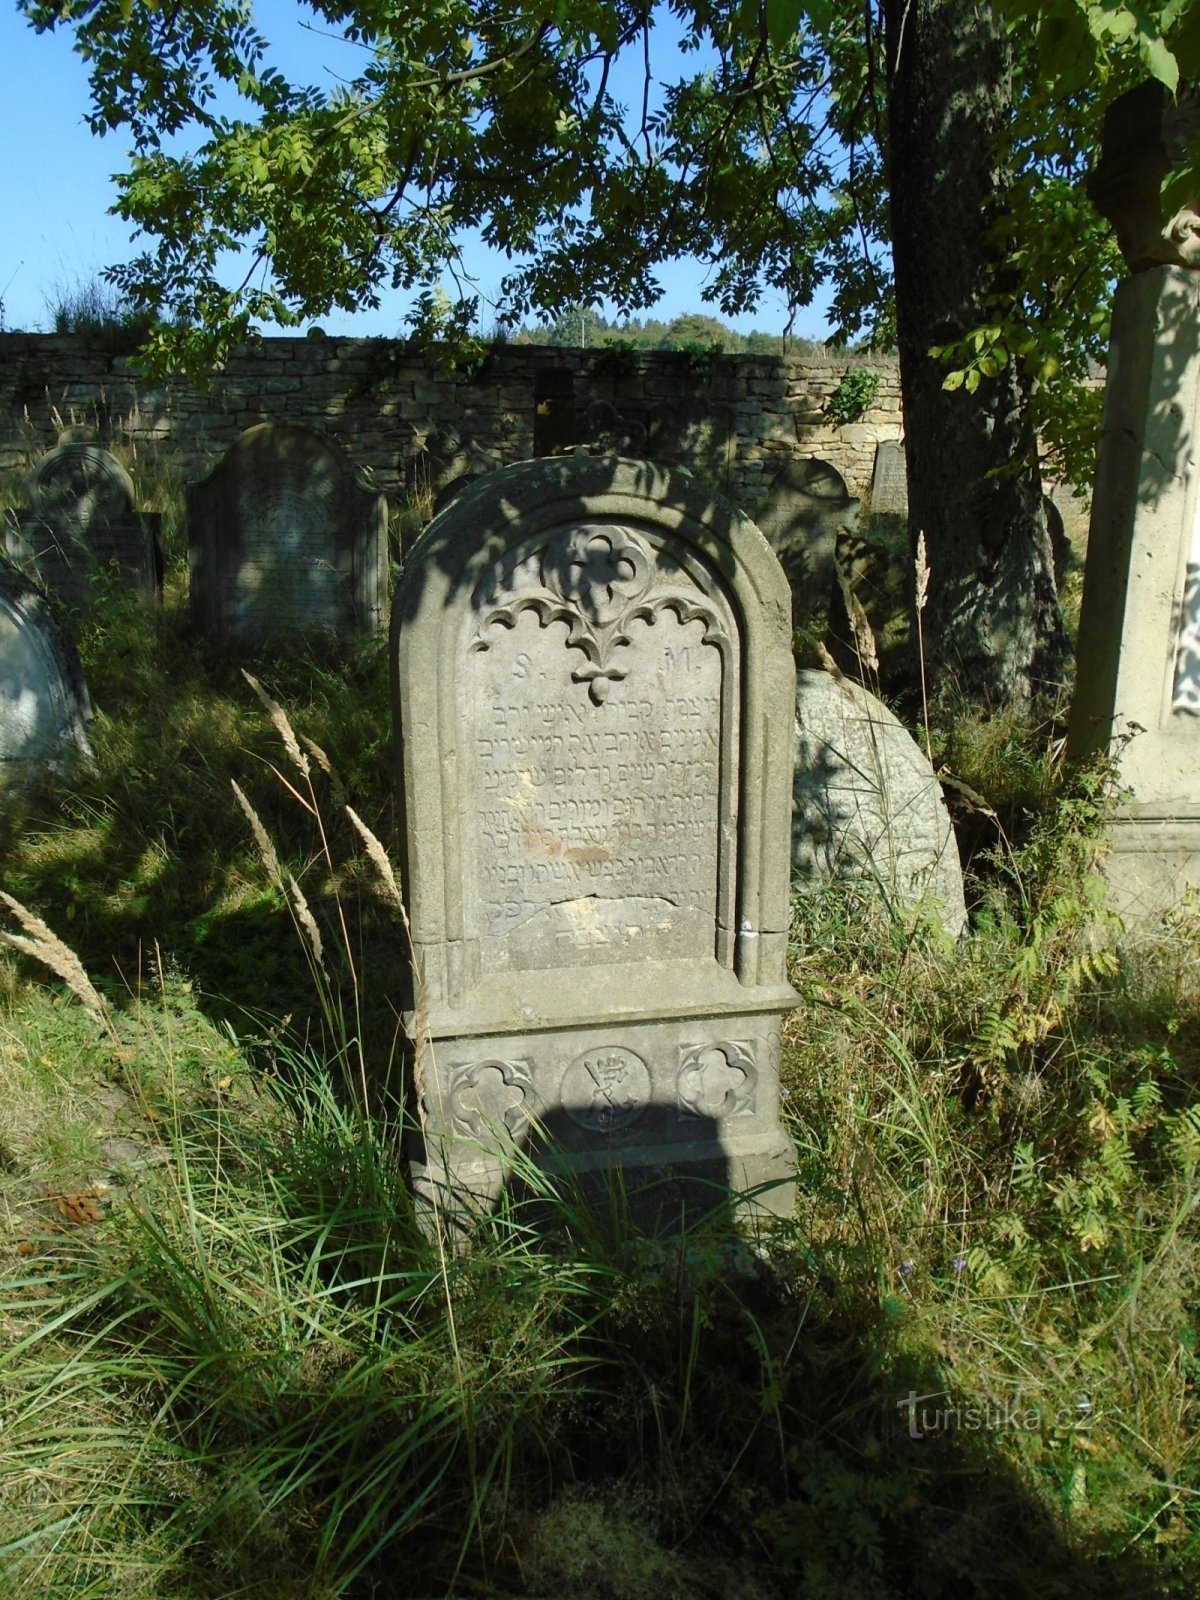 Judovsko pokopališče (Velká Bukovina, 1.10.2017. oktober XNUMX)